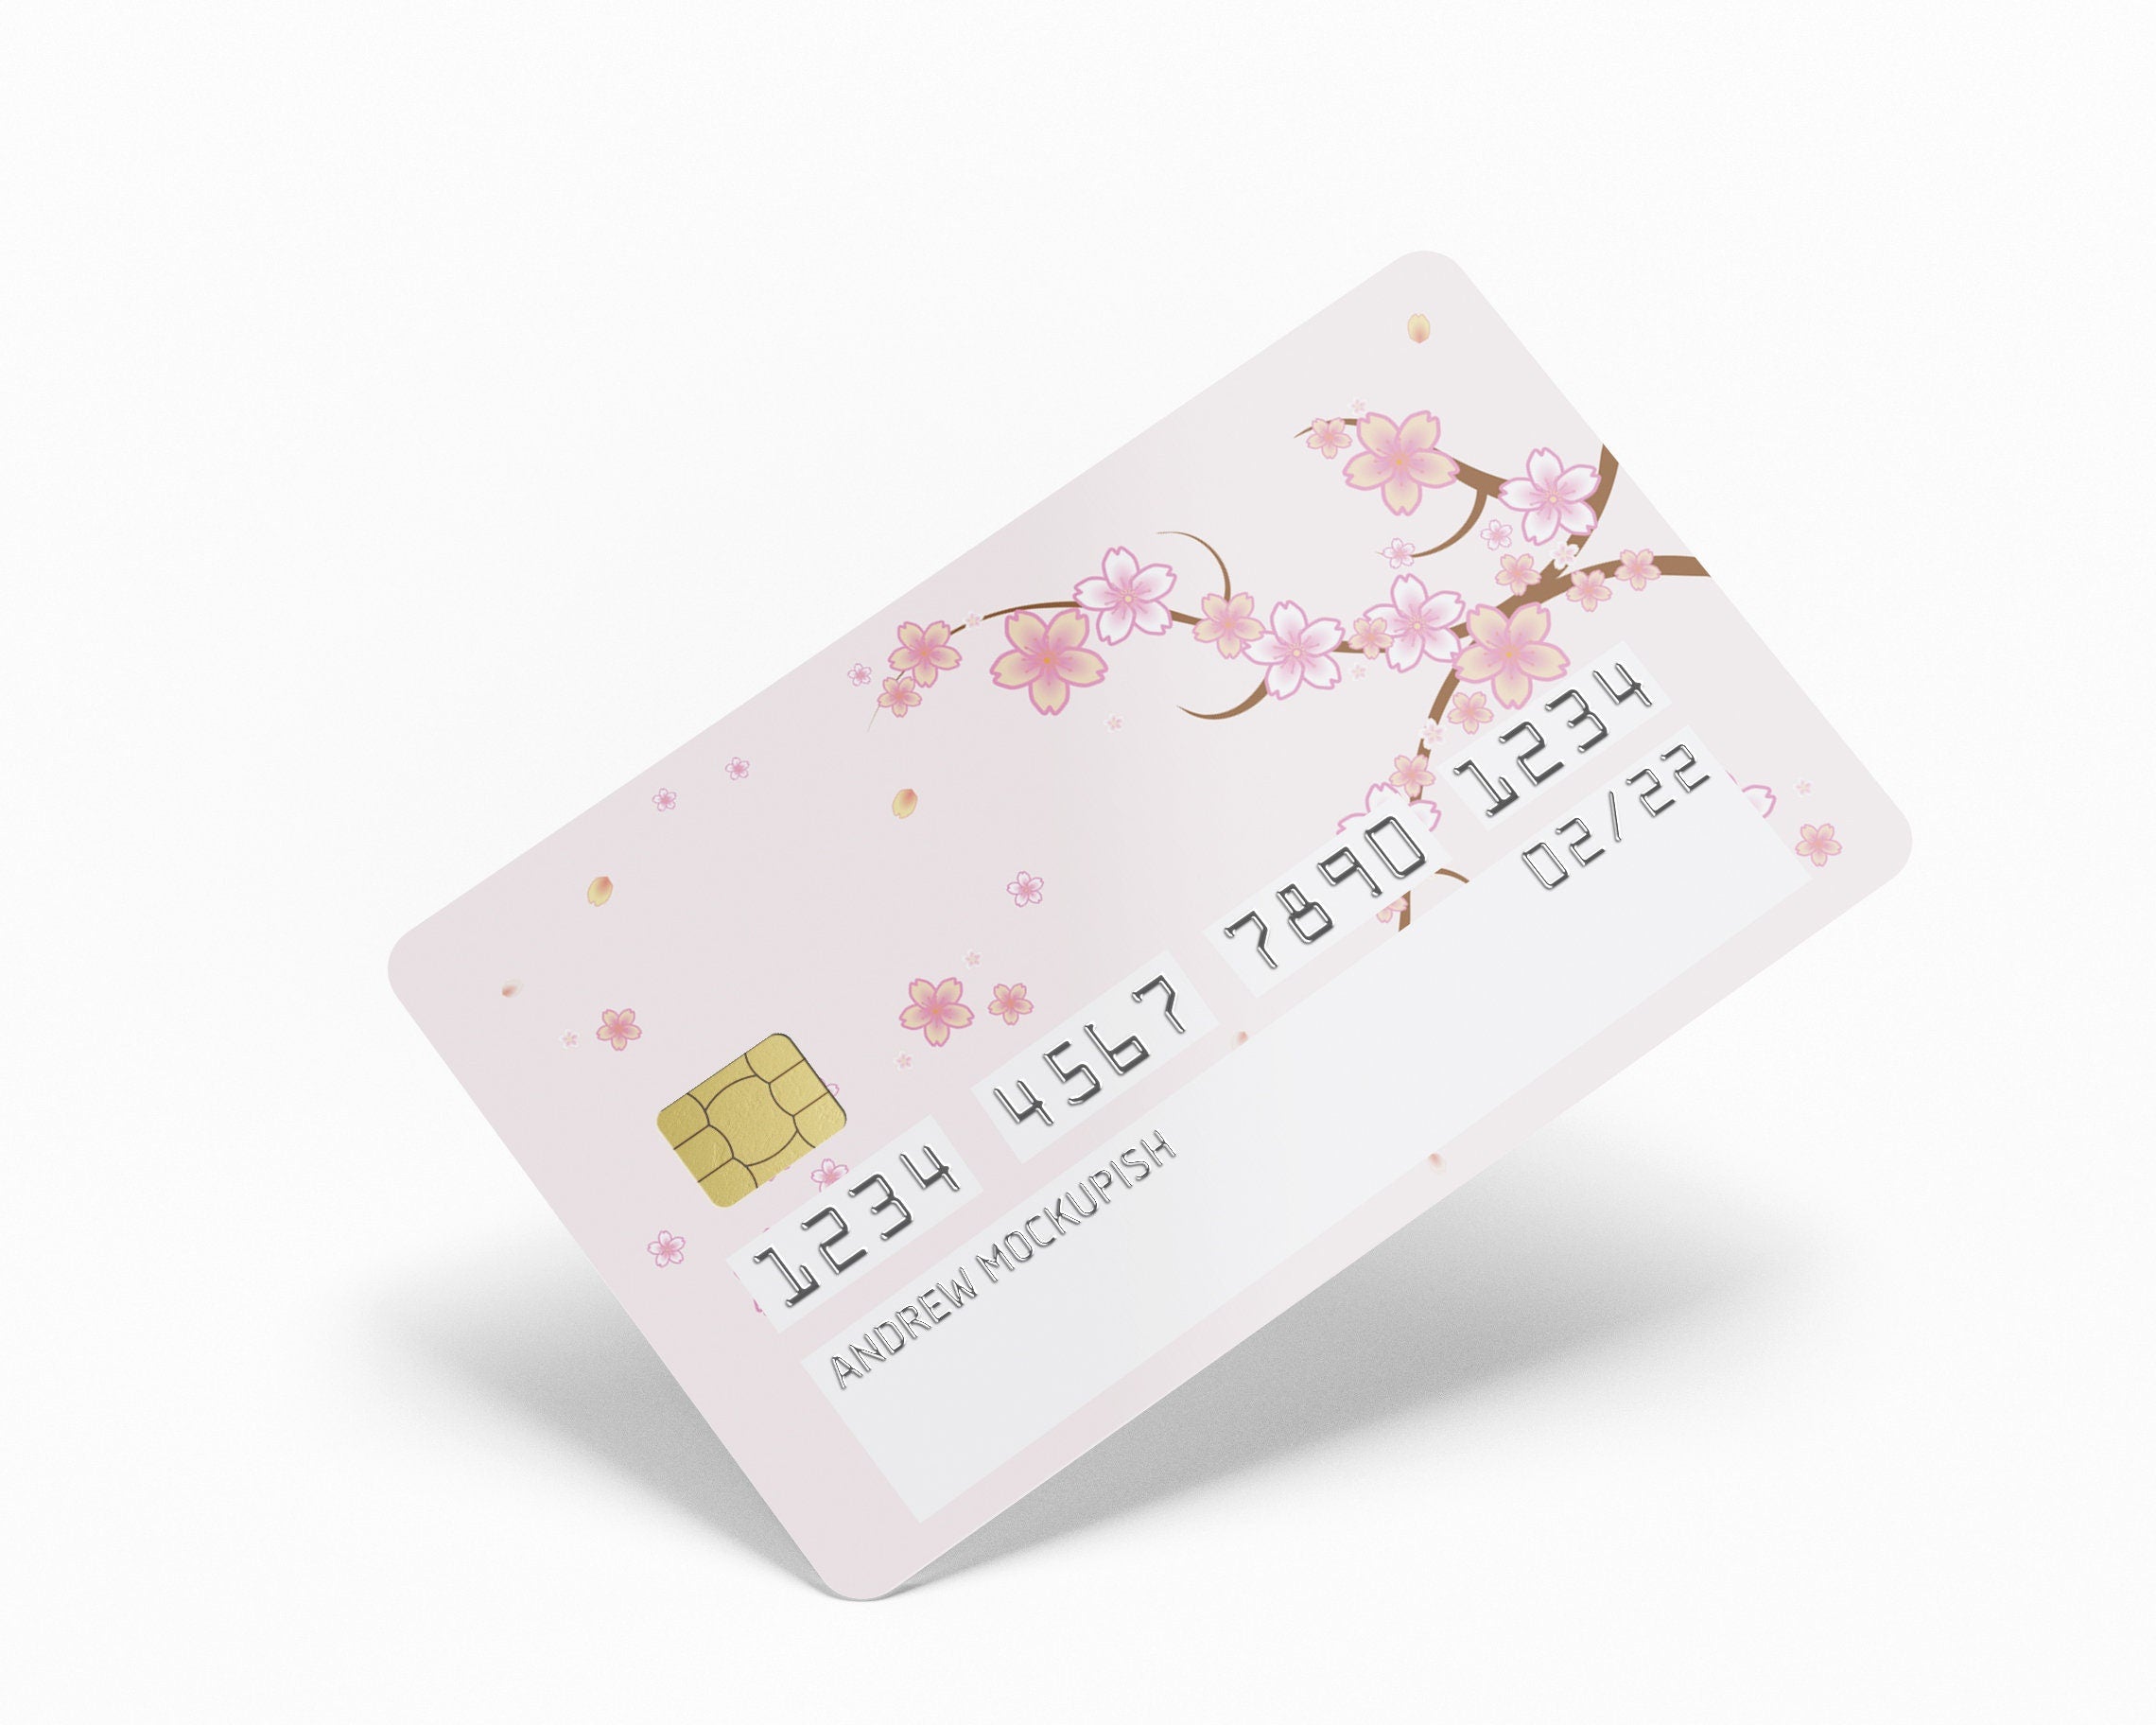 Debit Card Cover 